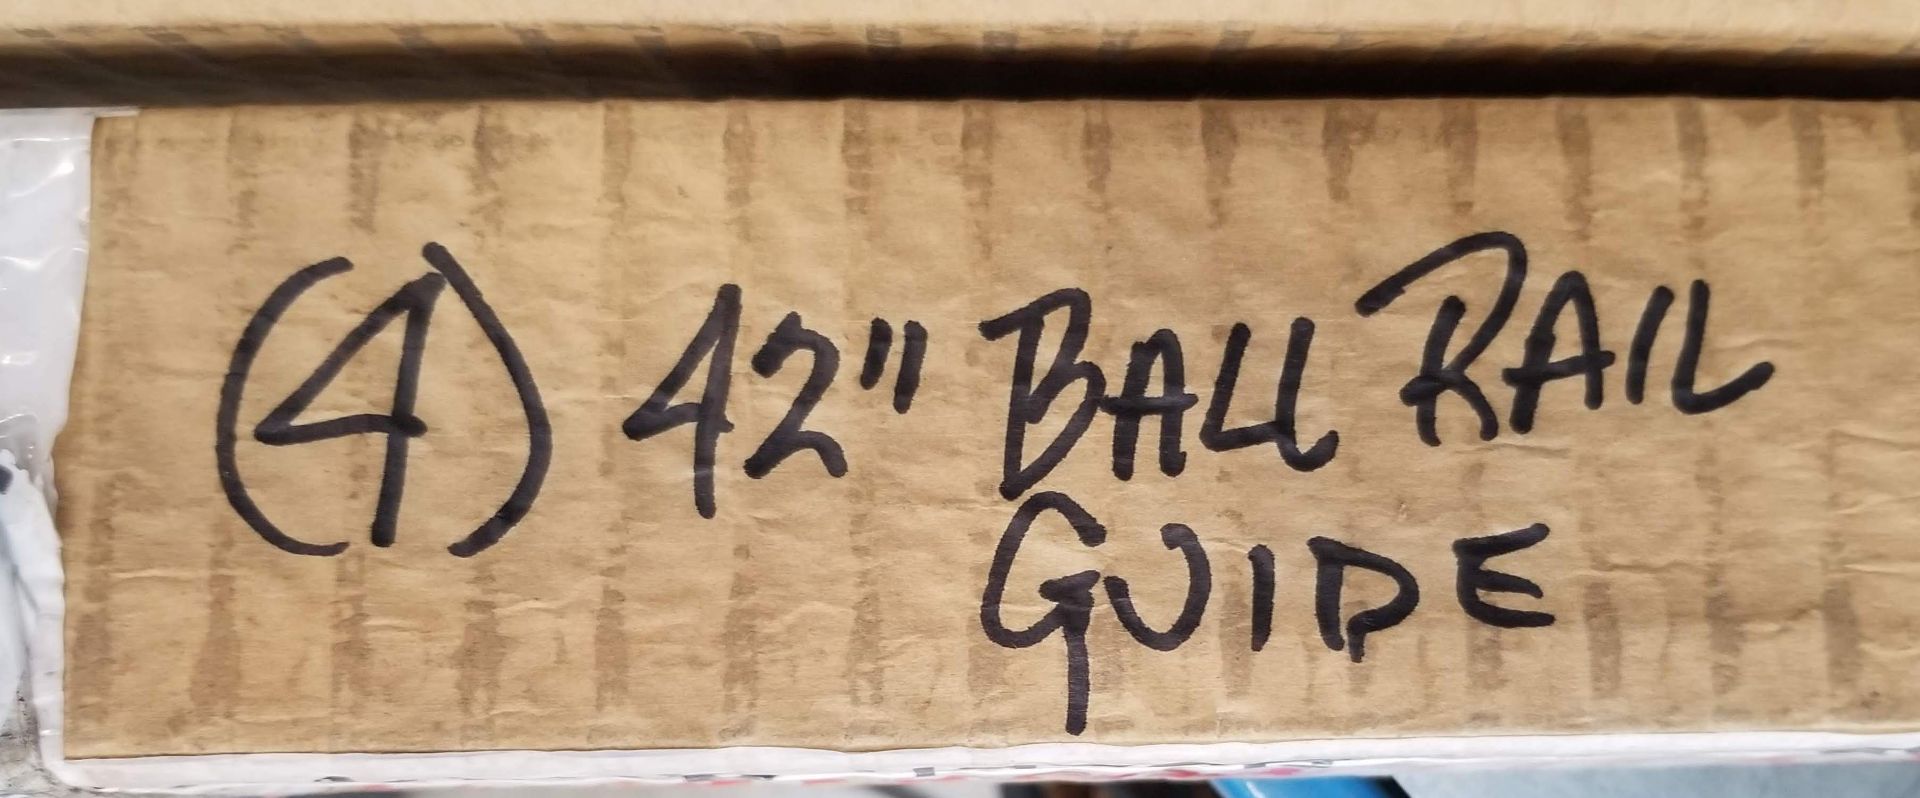 42" BALL RAIL GUDE - 4 PCS - Image 2 of 2